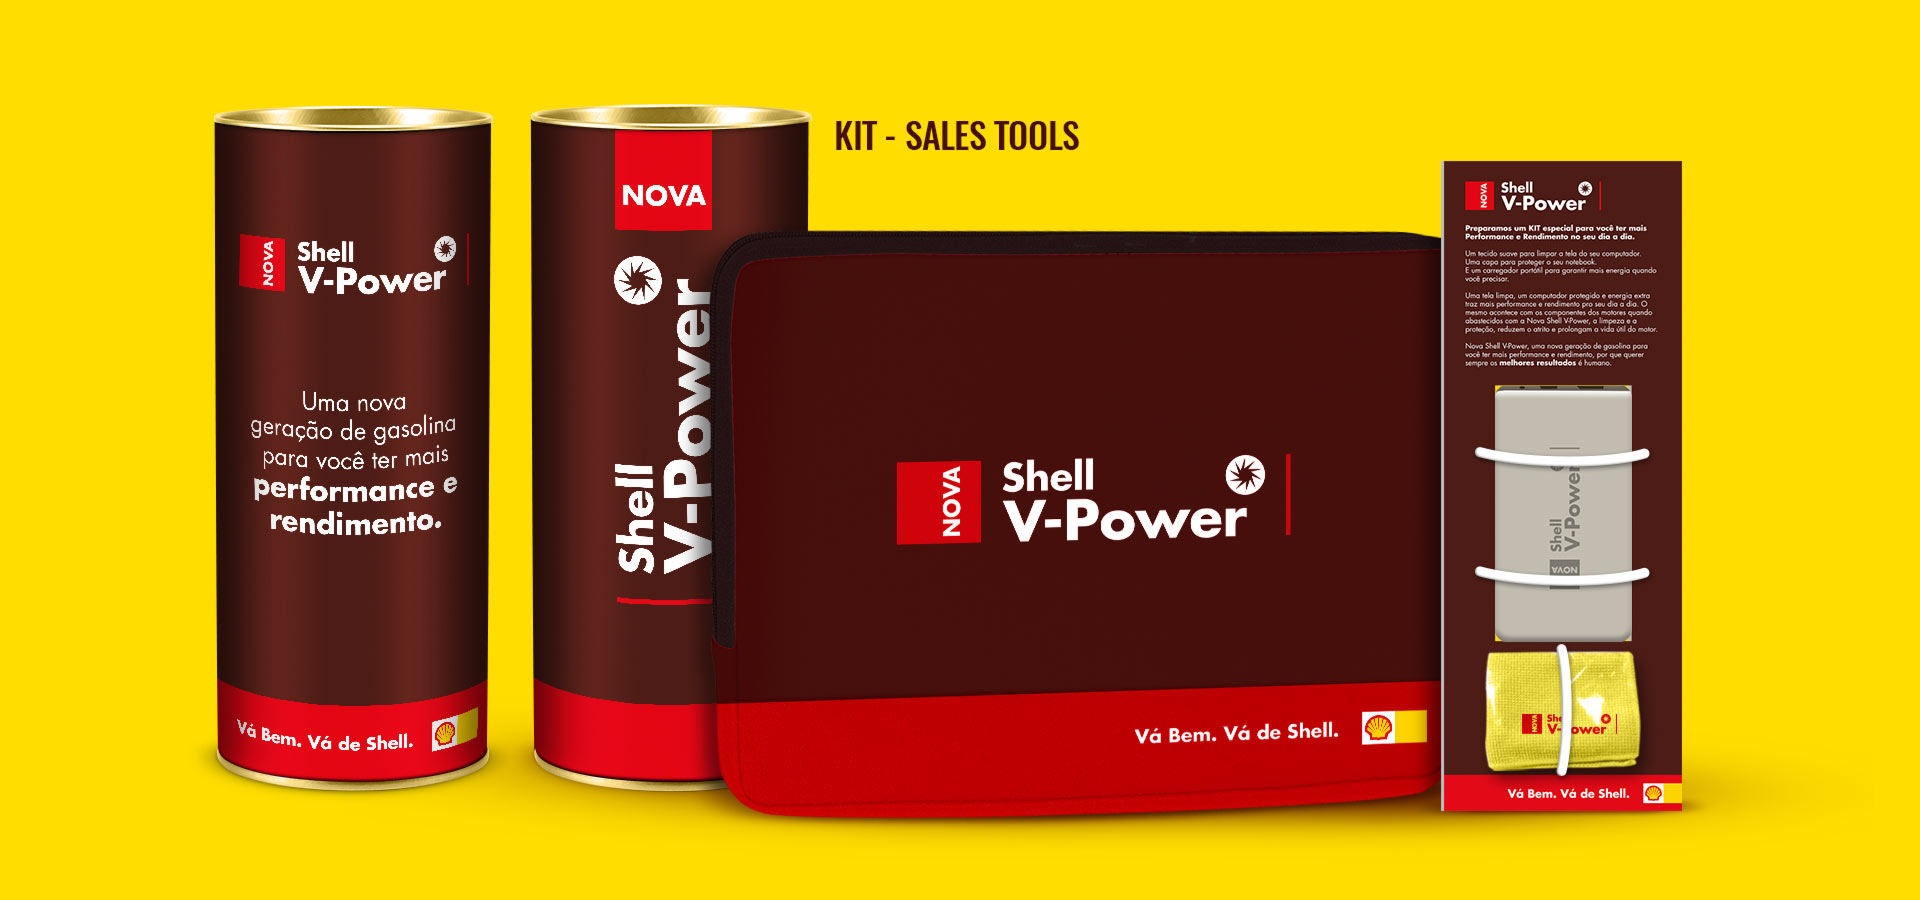 Shell, kit sales tools